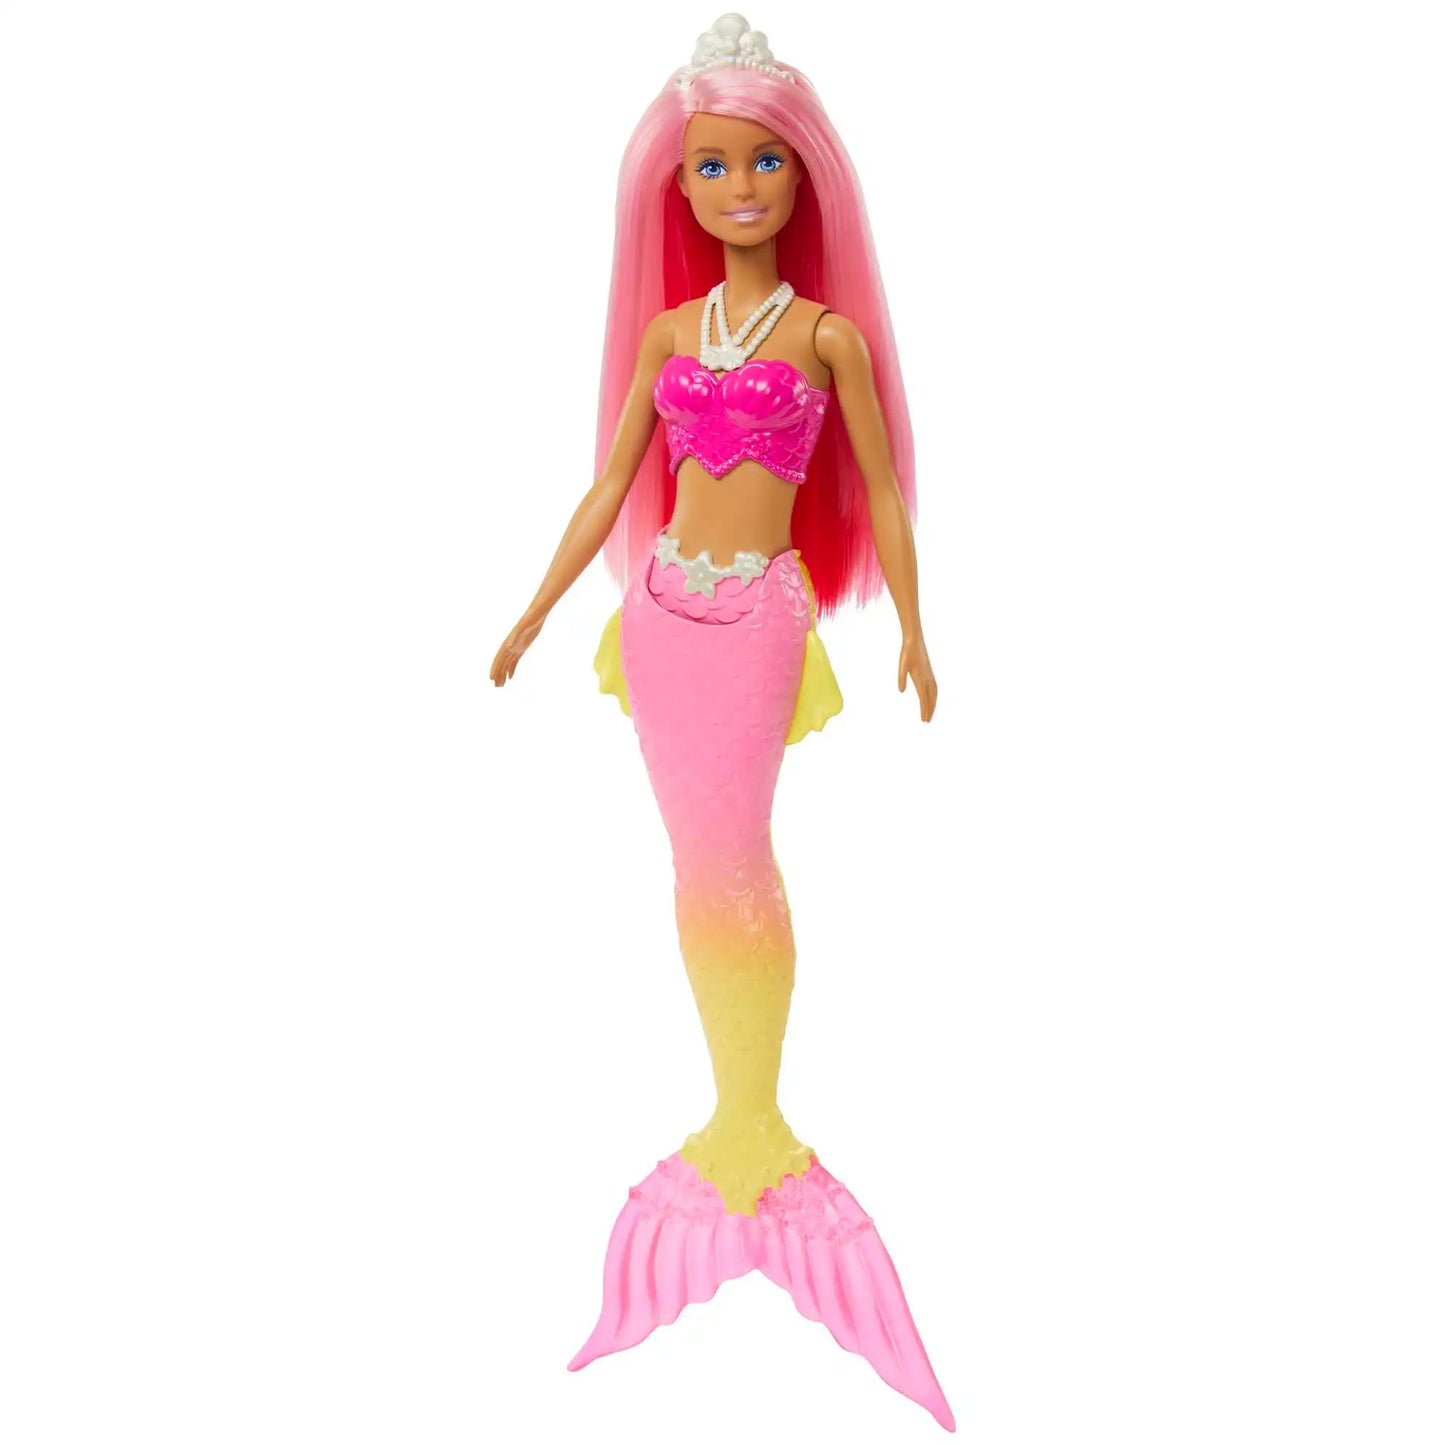 Barbie HGR08 Dreamtopia Mermaid Doll Assortment